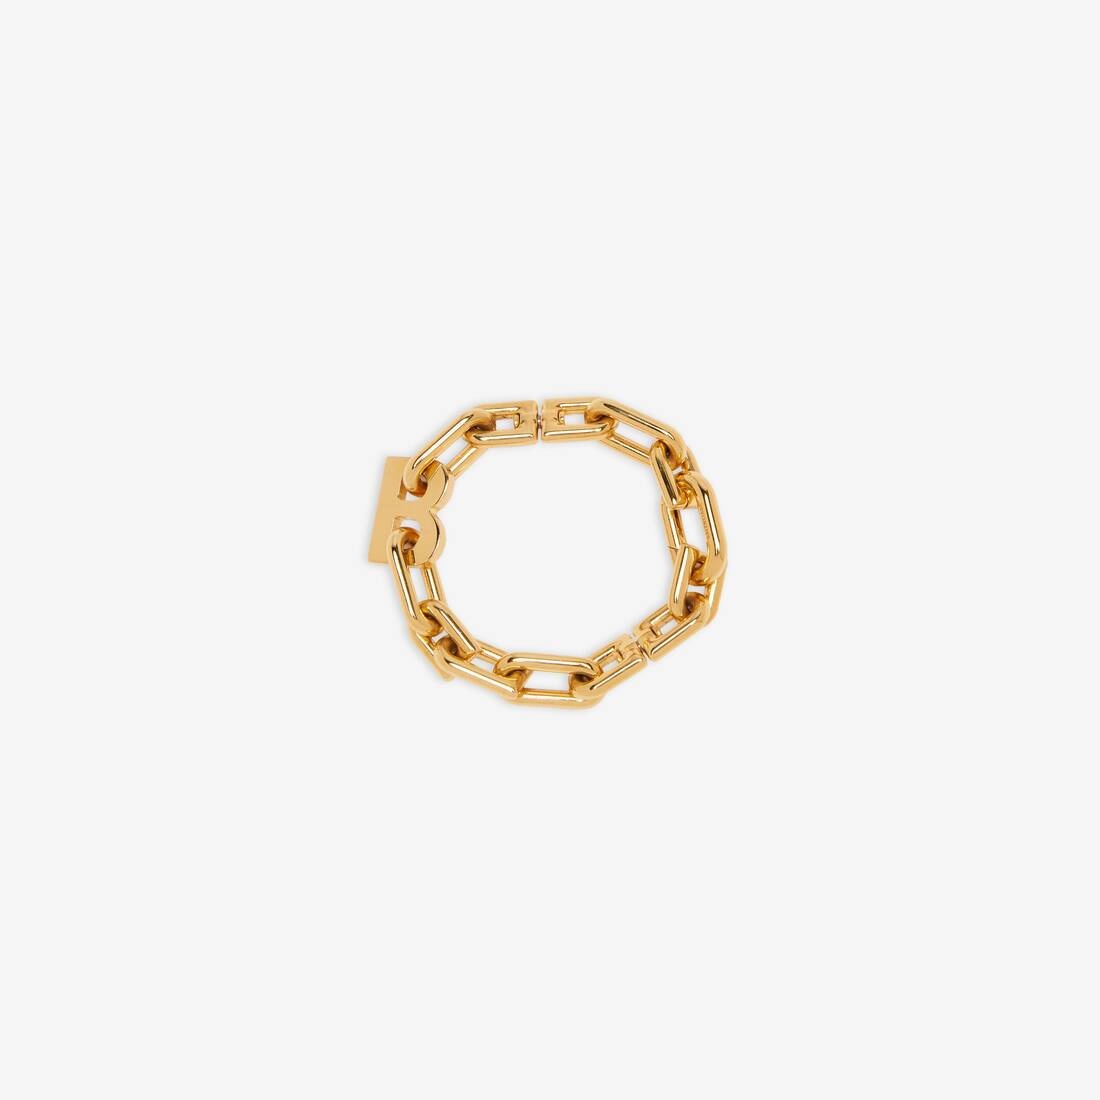 B Chain Thin Bracelet in Gold - 3